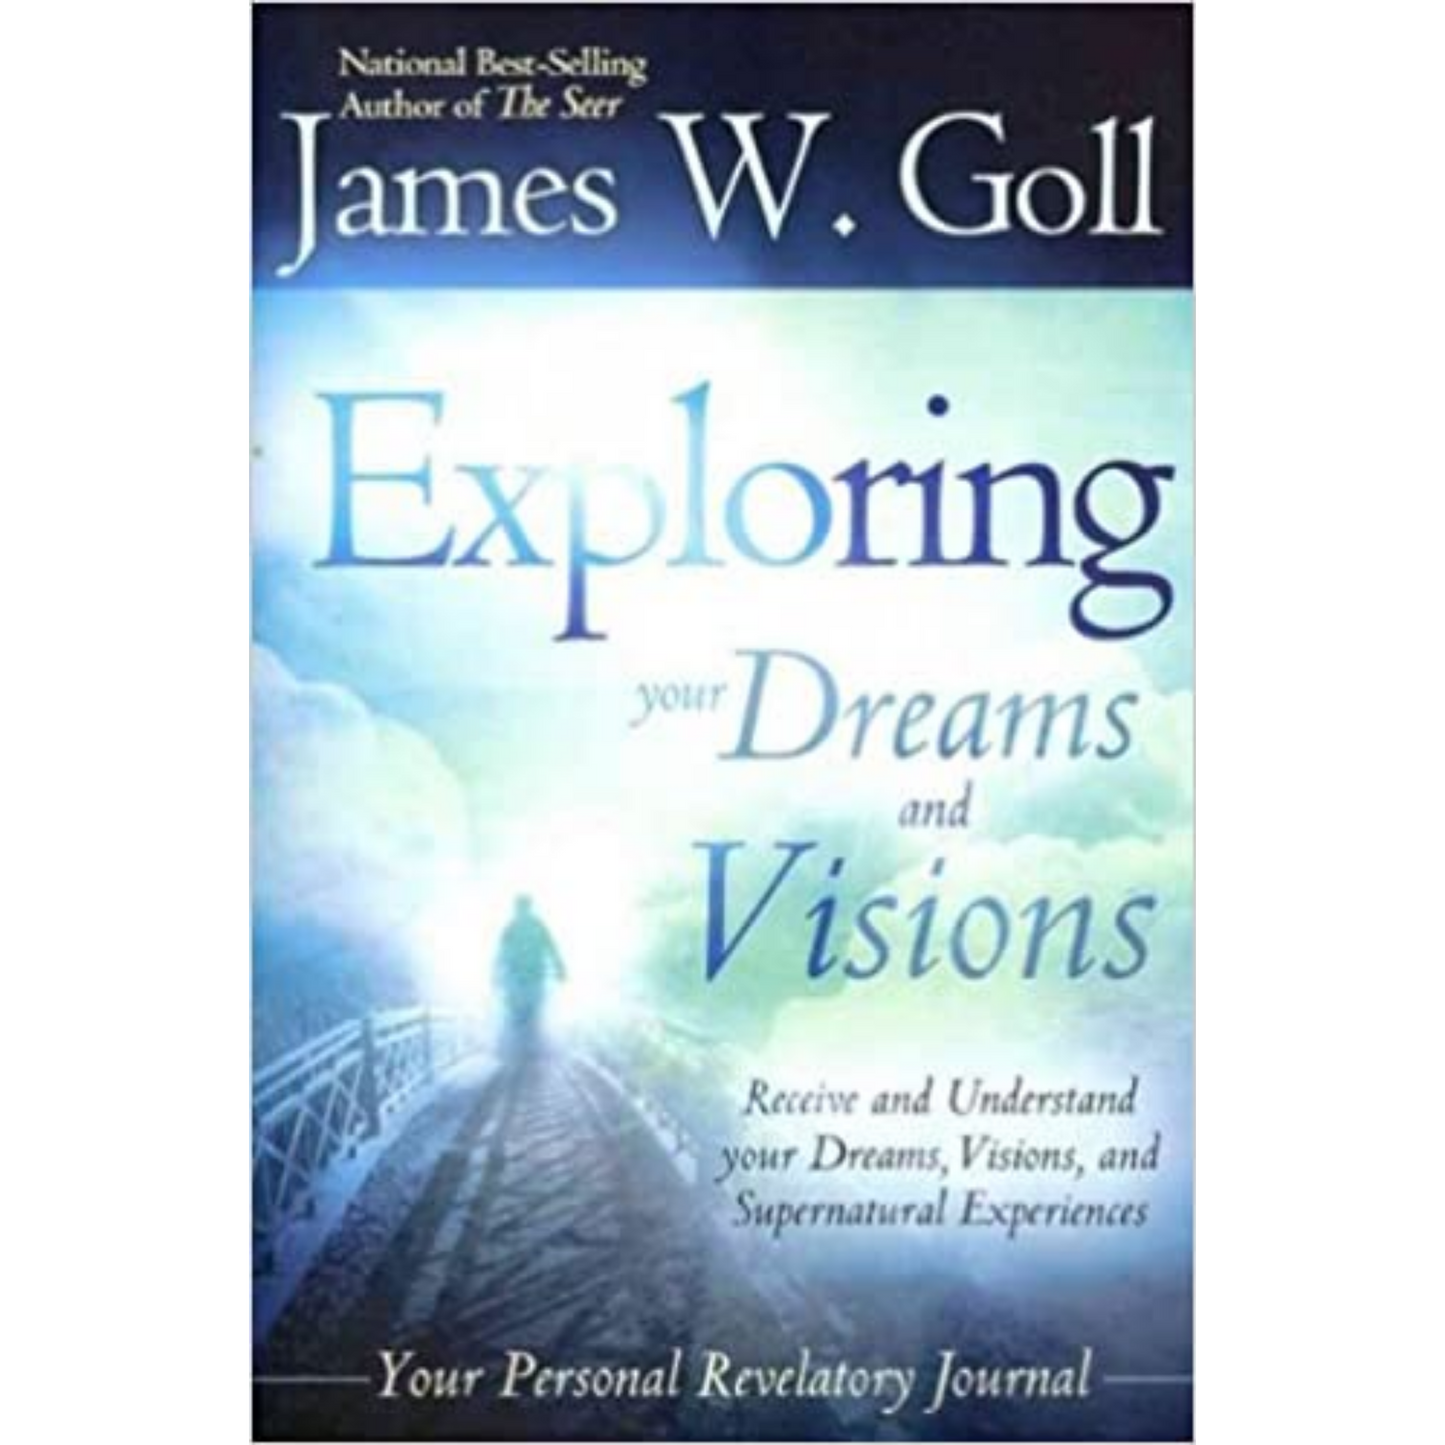 Exploring Your Dreams & Visions